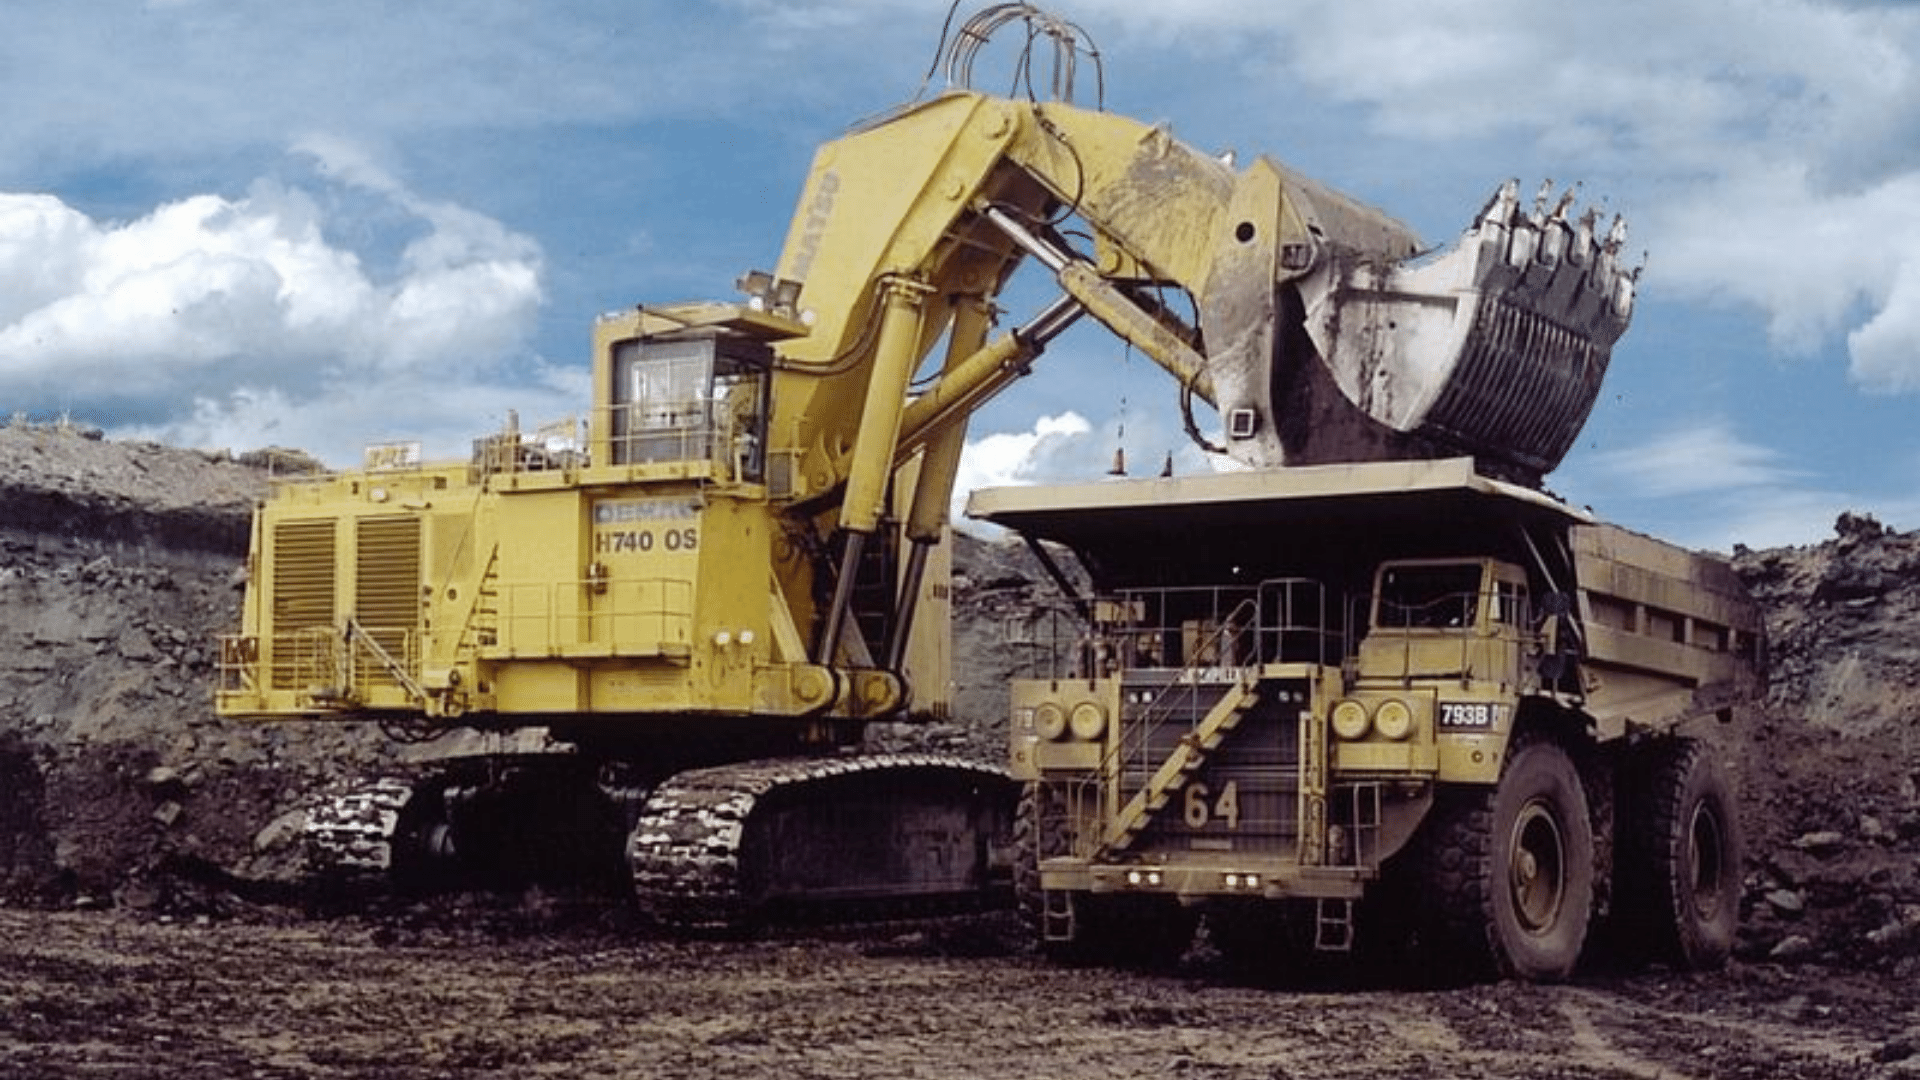 Demag H740 OS excavator